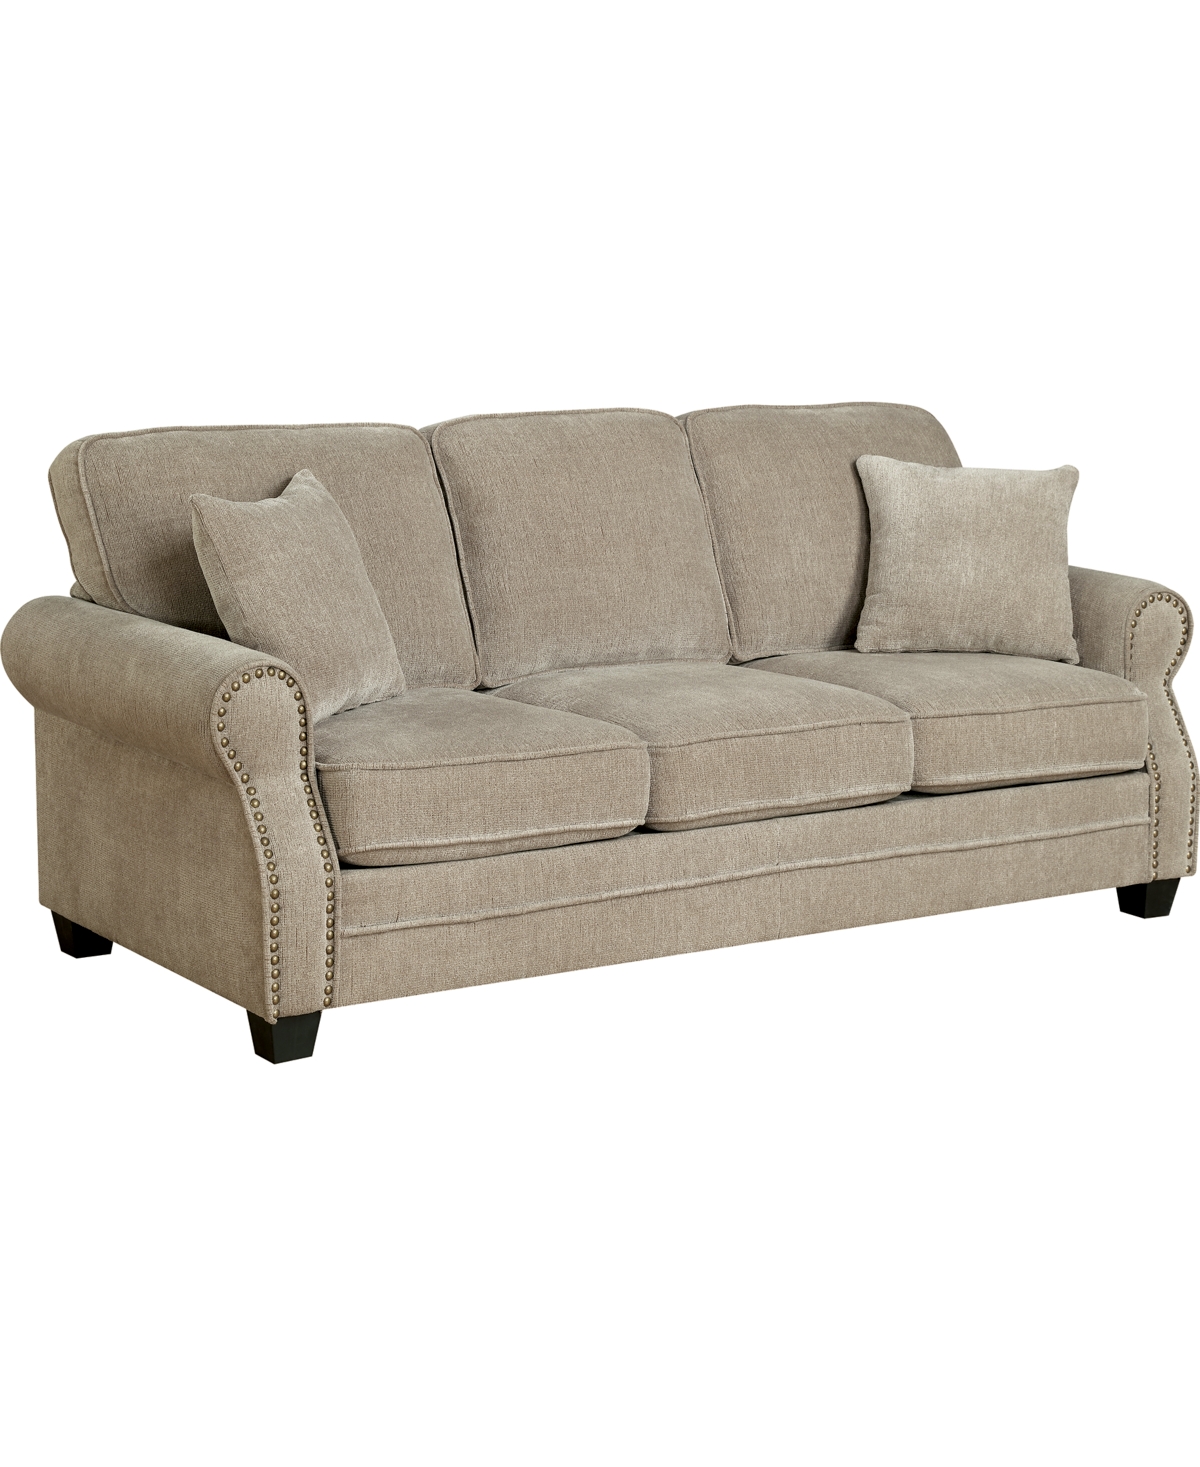 Harzel Upholstered Sofa